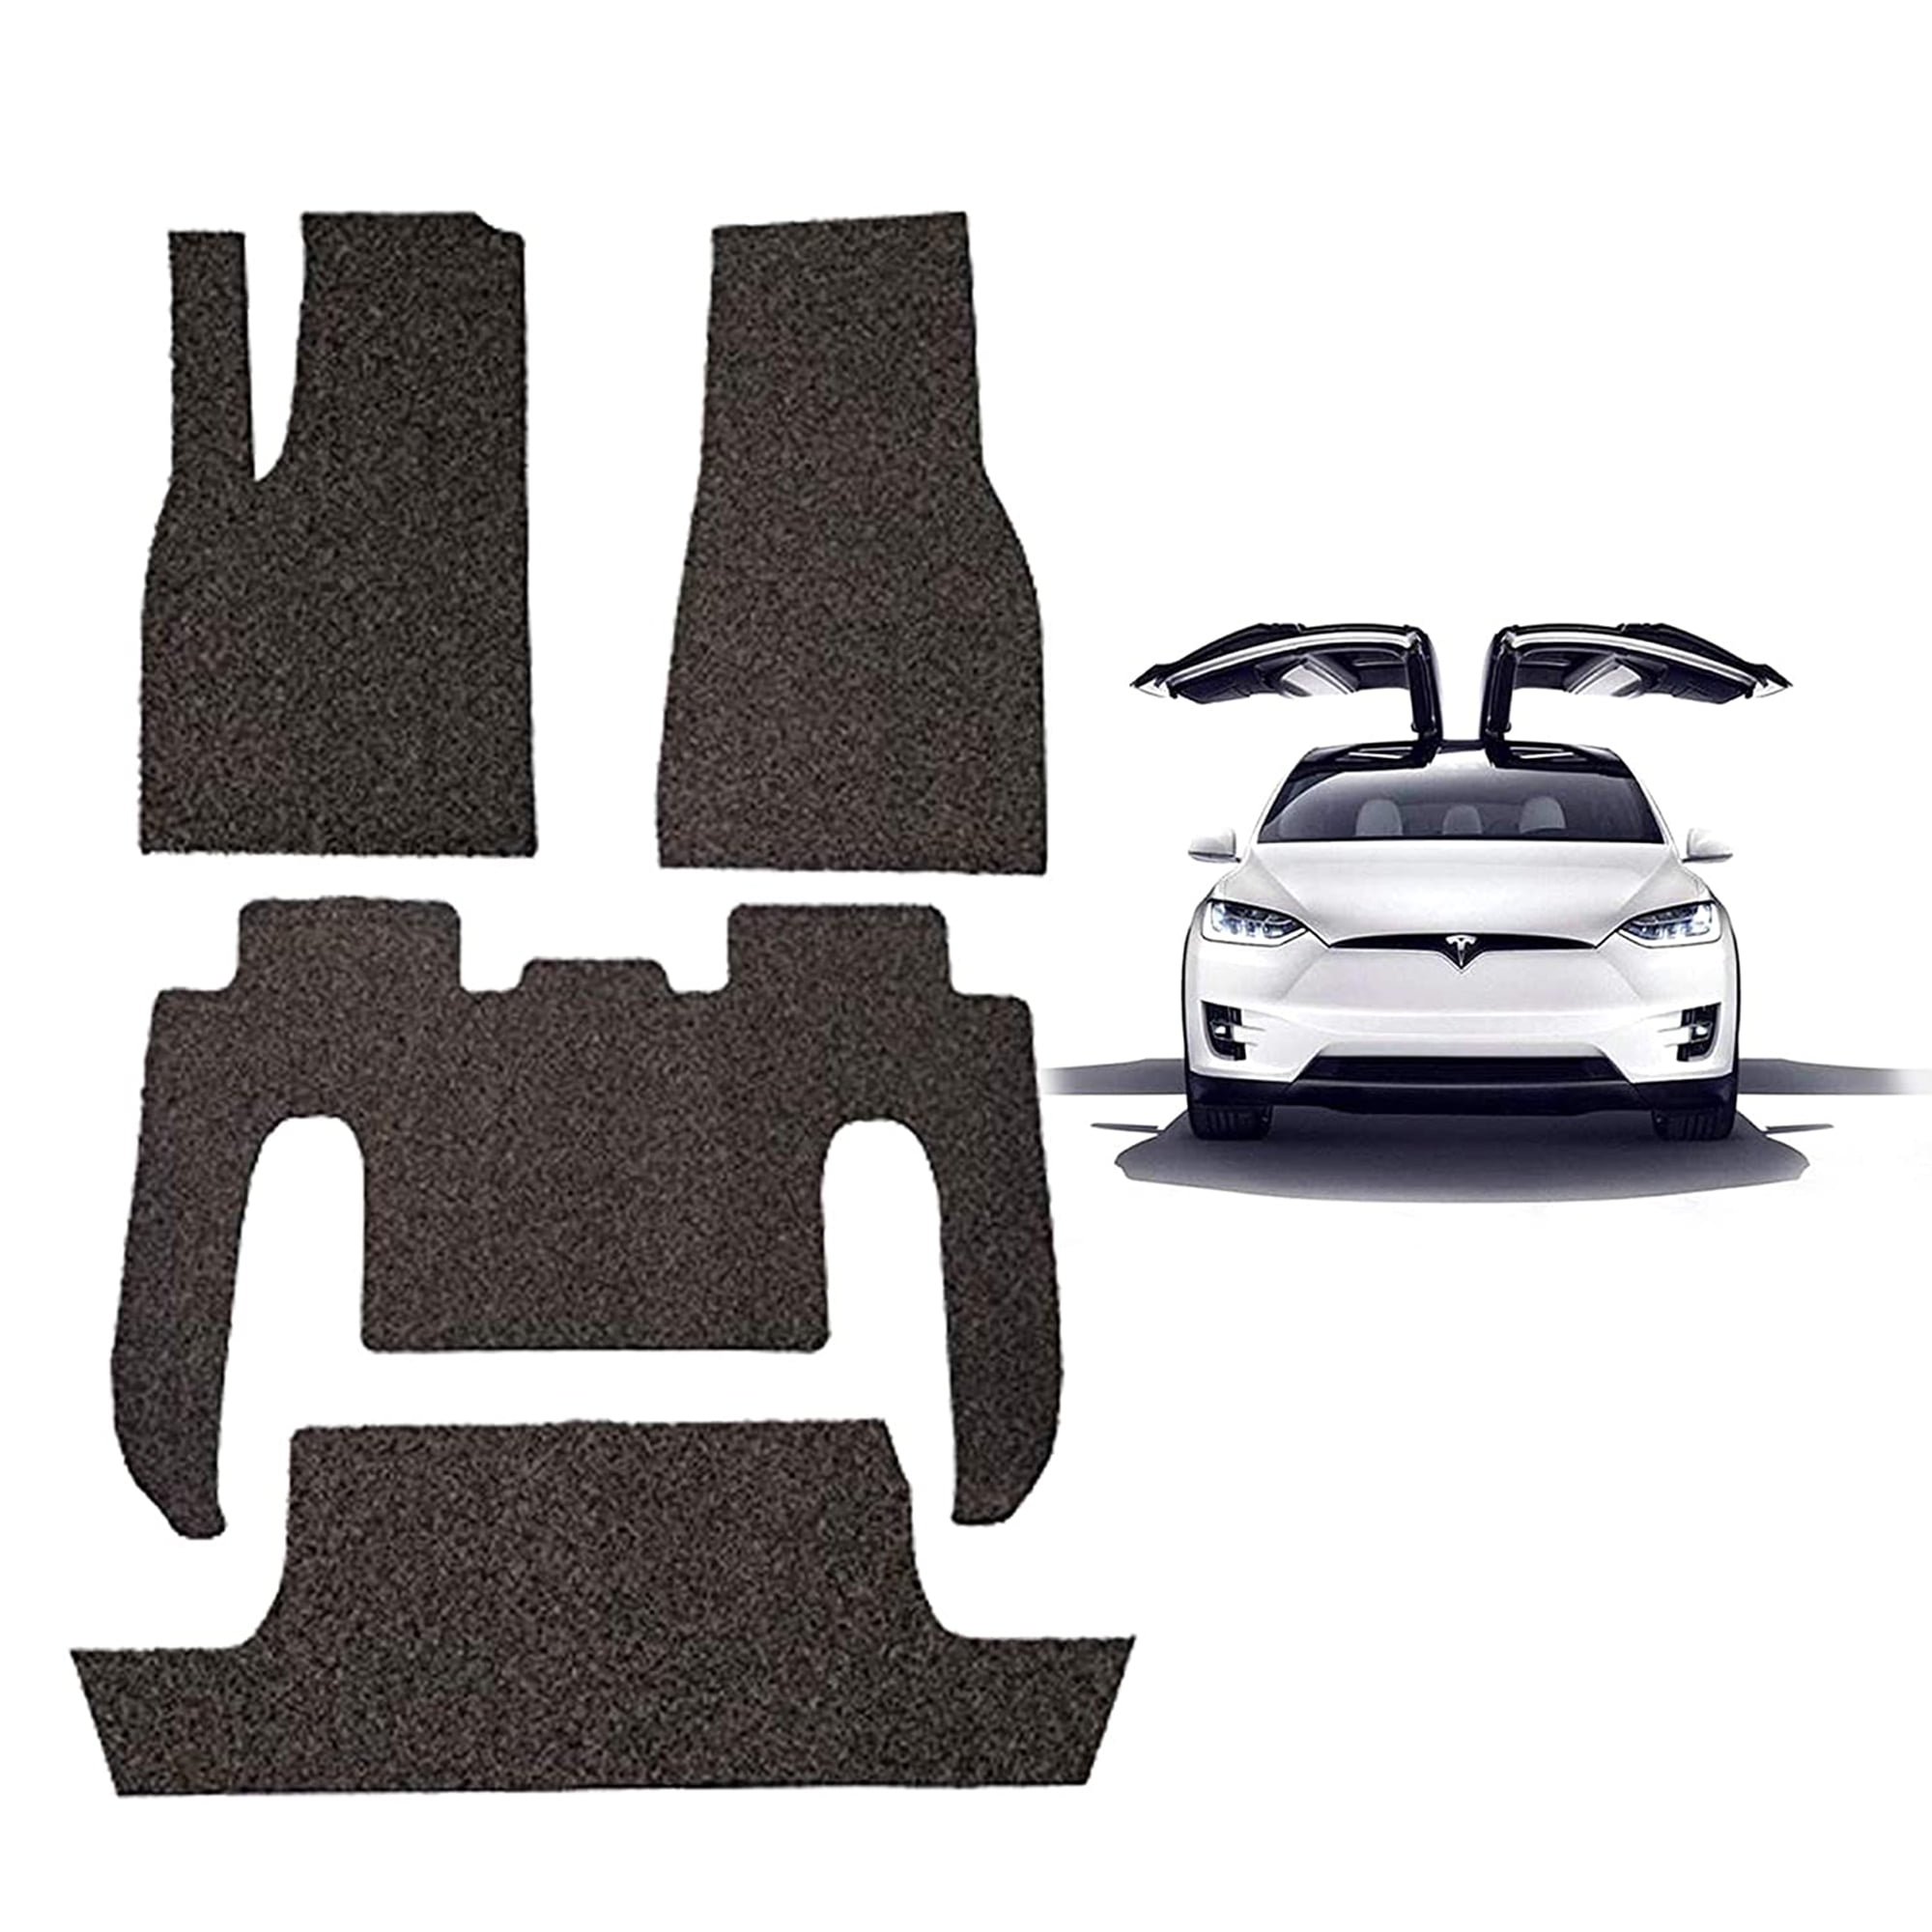 KARMAS PRODUCT Tesla Model X 6 Seats 4 Piece Car Accessories Floor